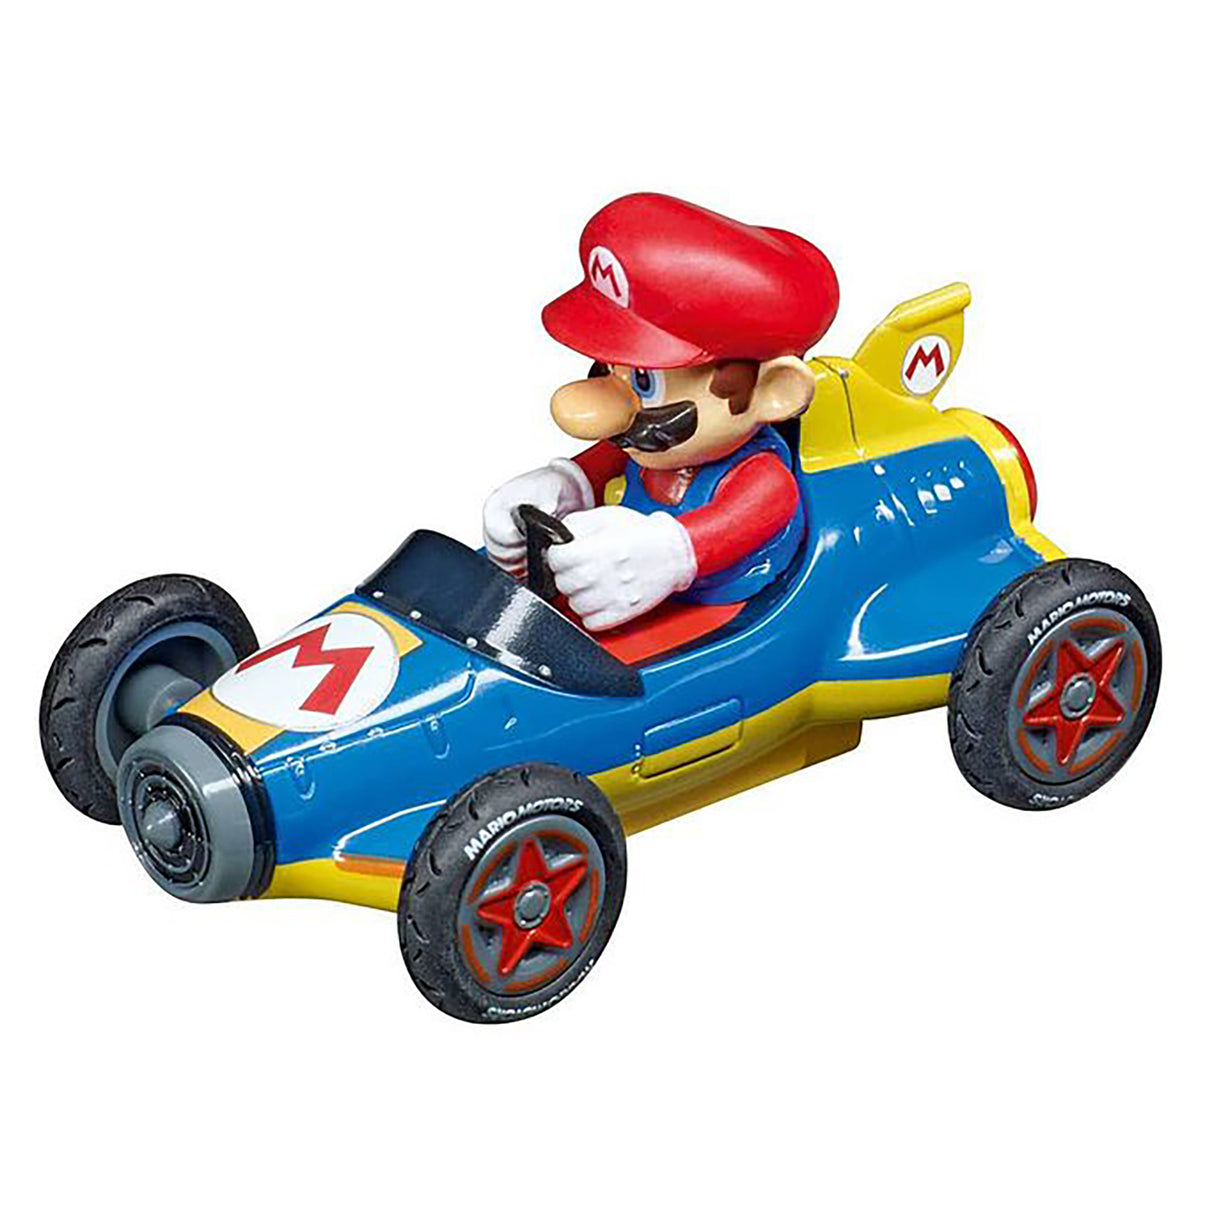 Carrera GO!!! Mario Kart 8 Slot Cars - Mach 8